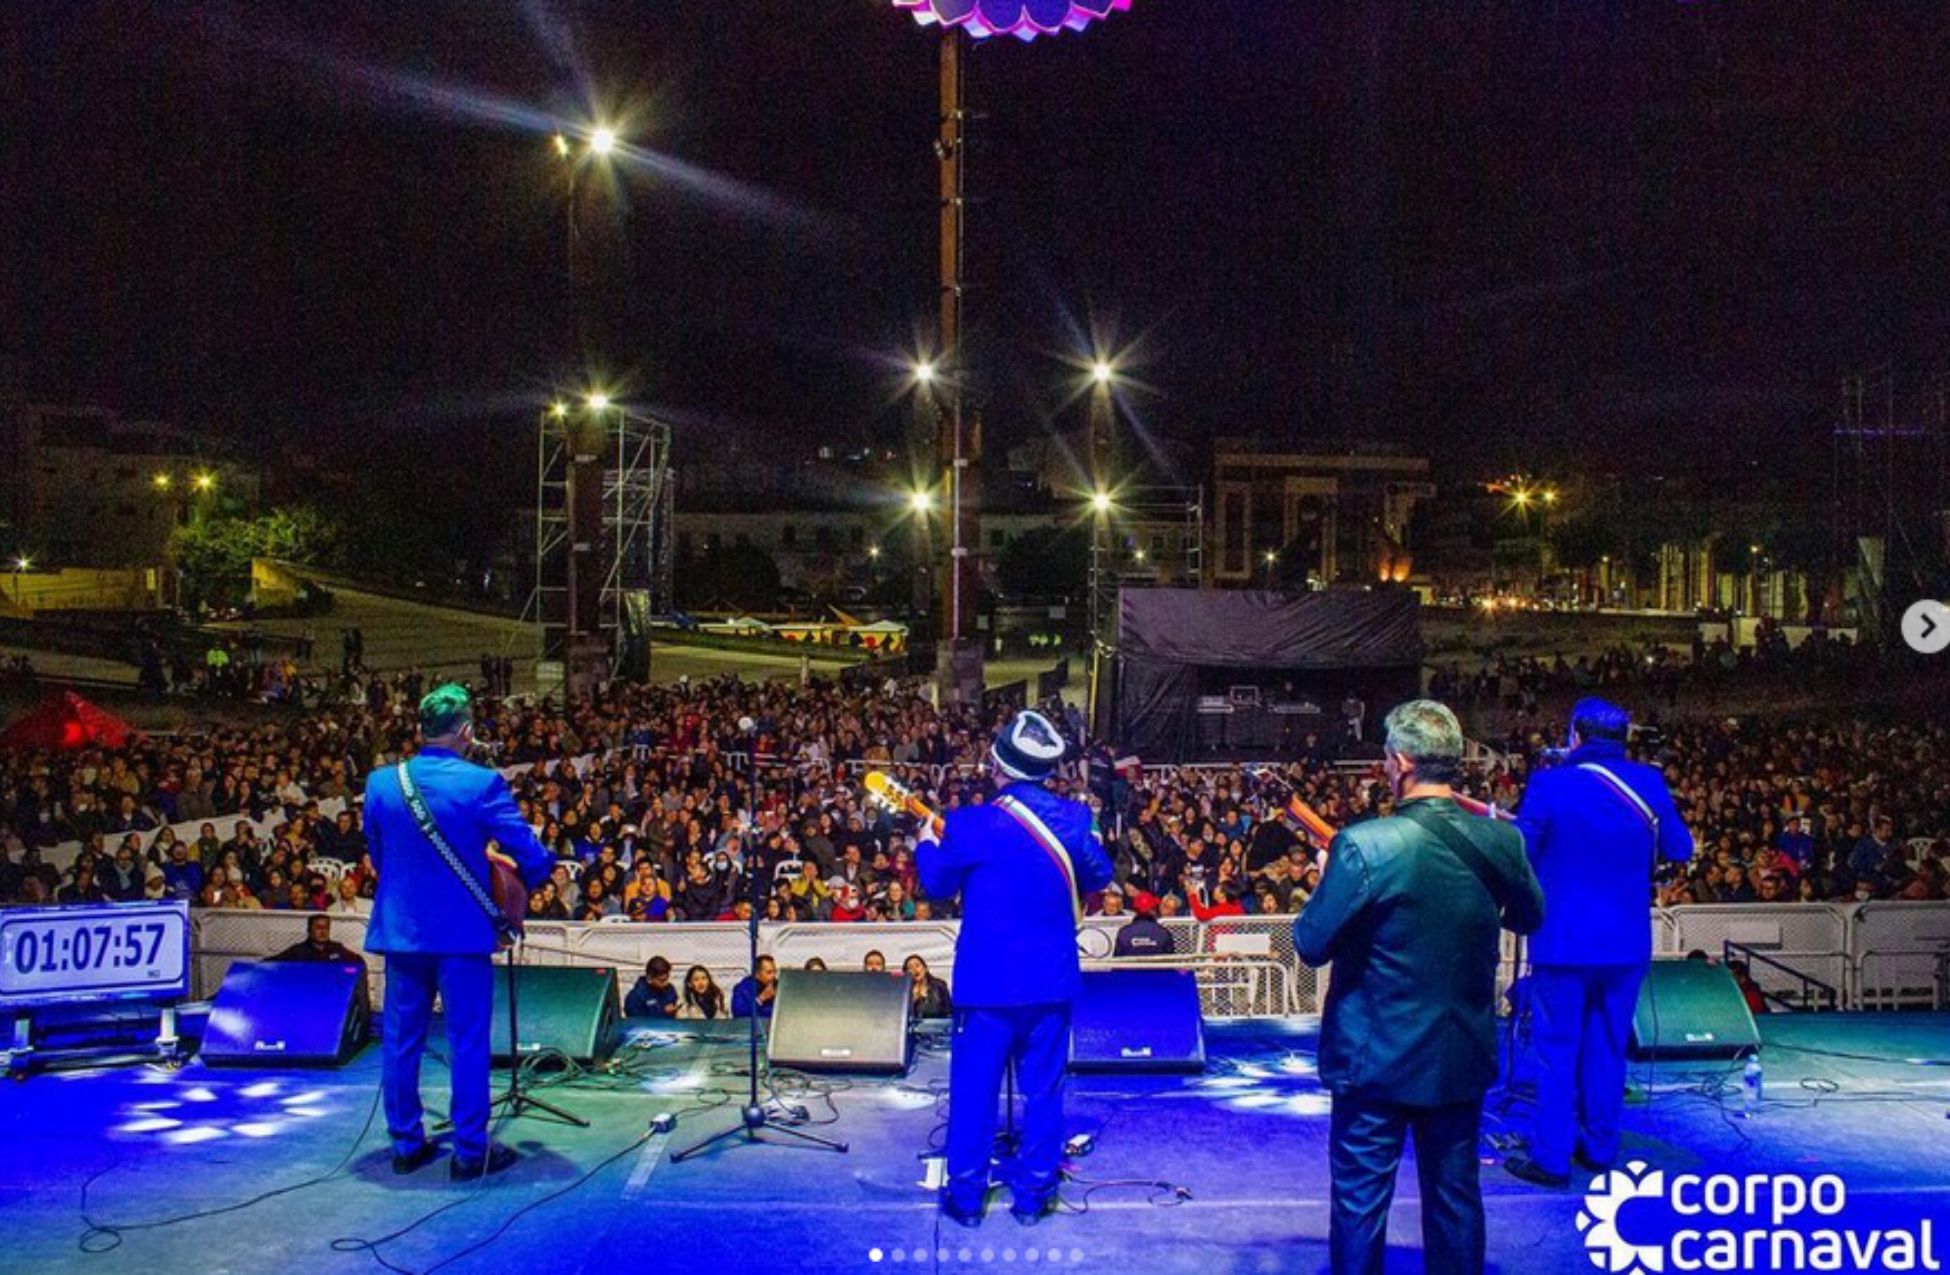 Carnaval de Negros y Blancos - Best Music Festivals in Colombia